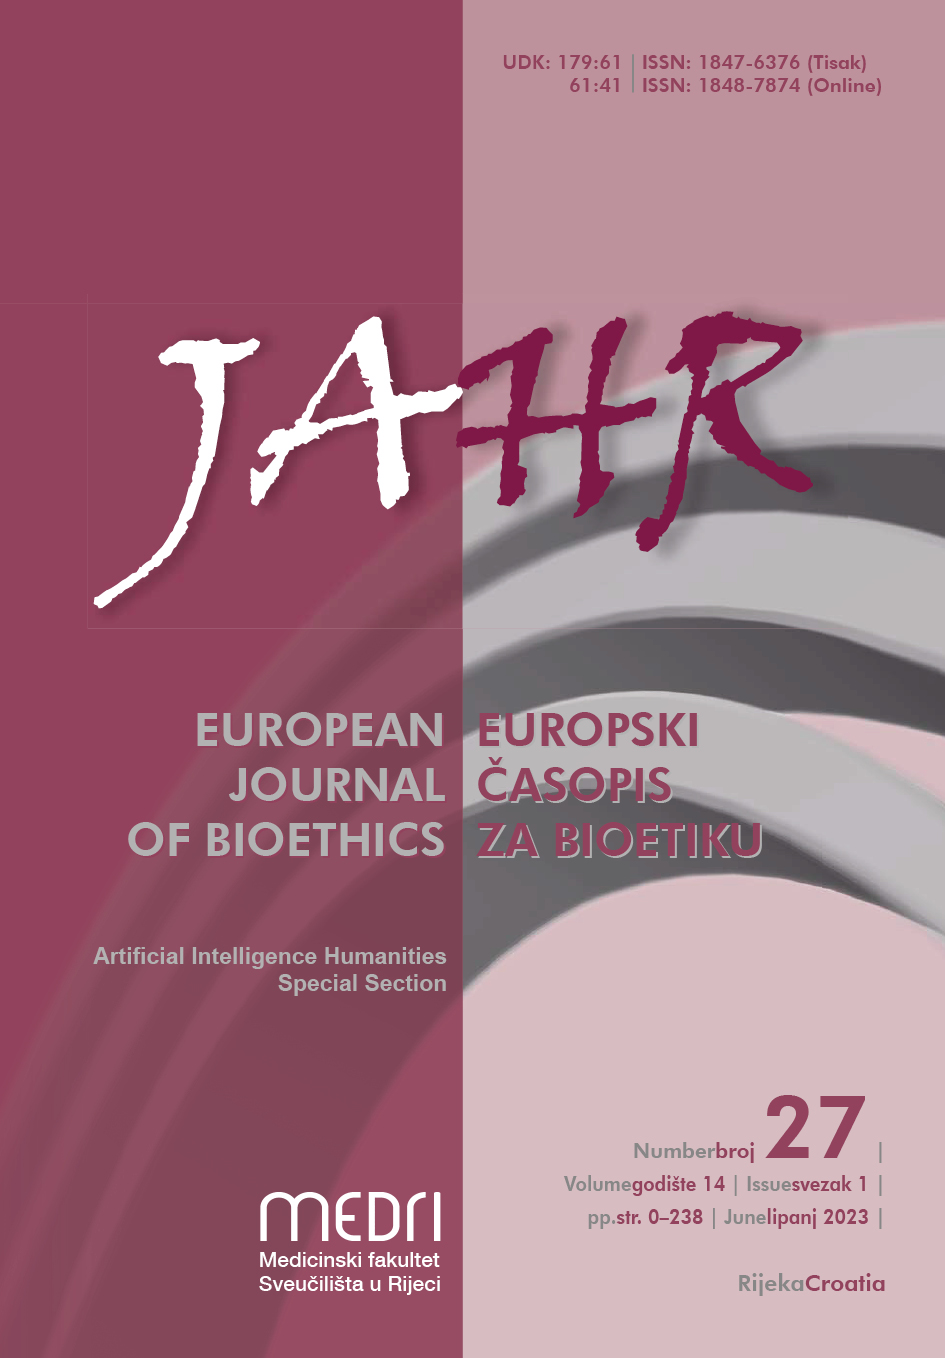 					View Vol. 14 No. 1 (2023): Jahr – European Journal of Bioethics
				